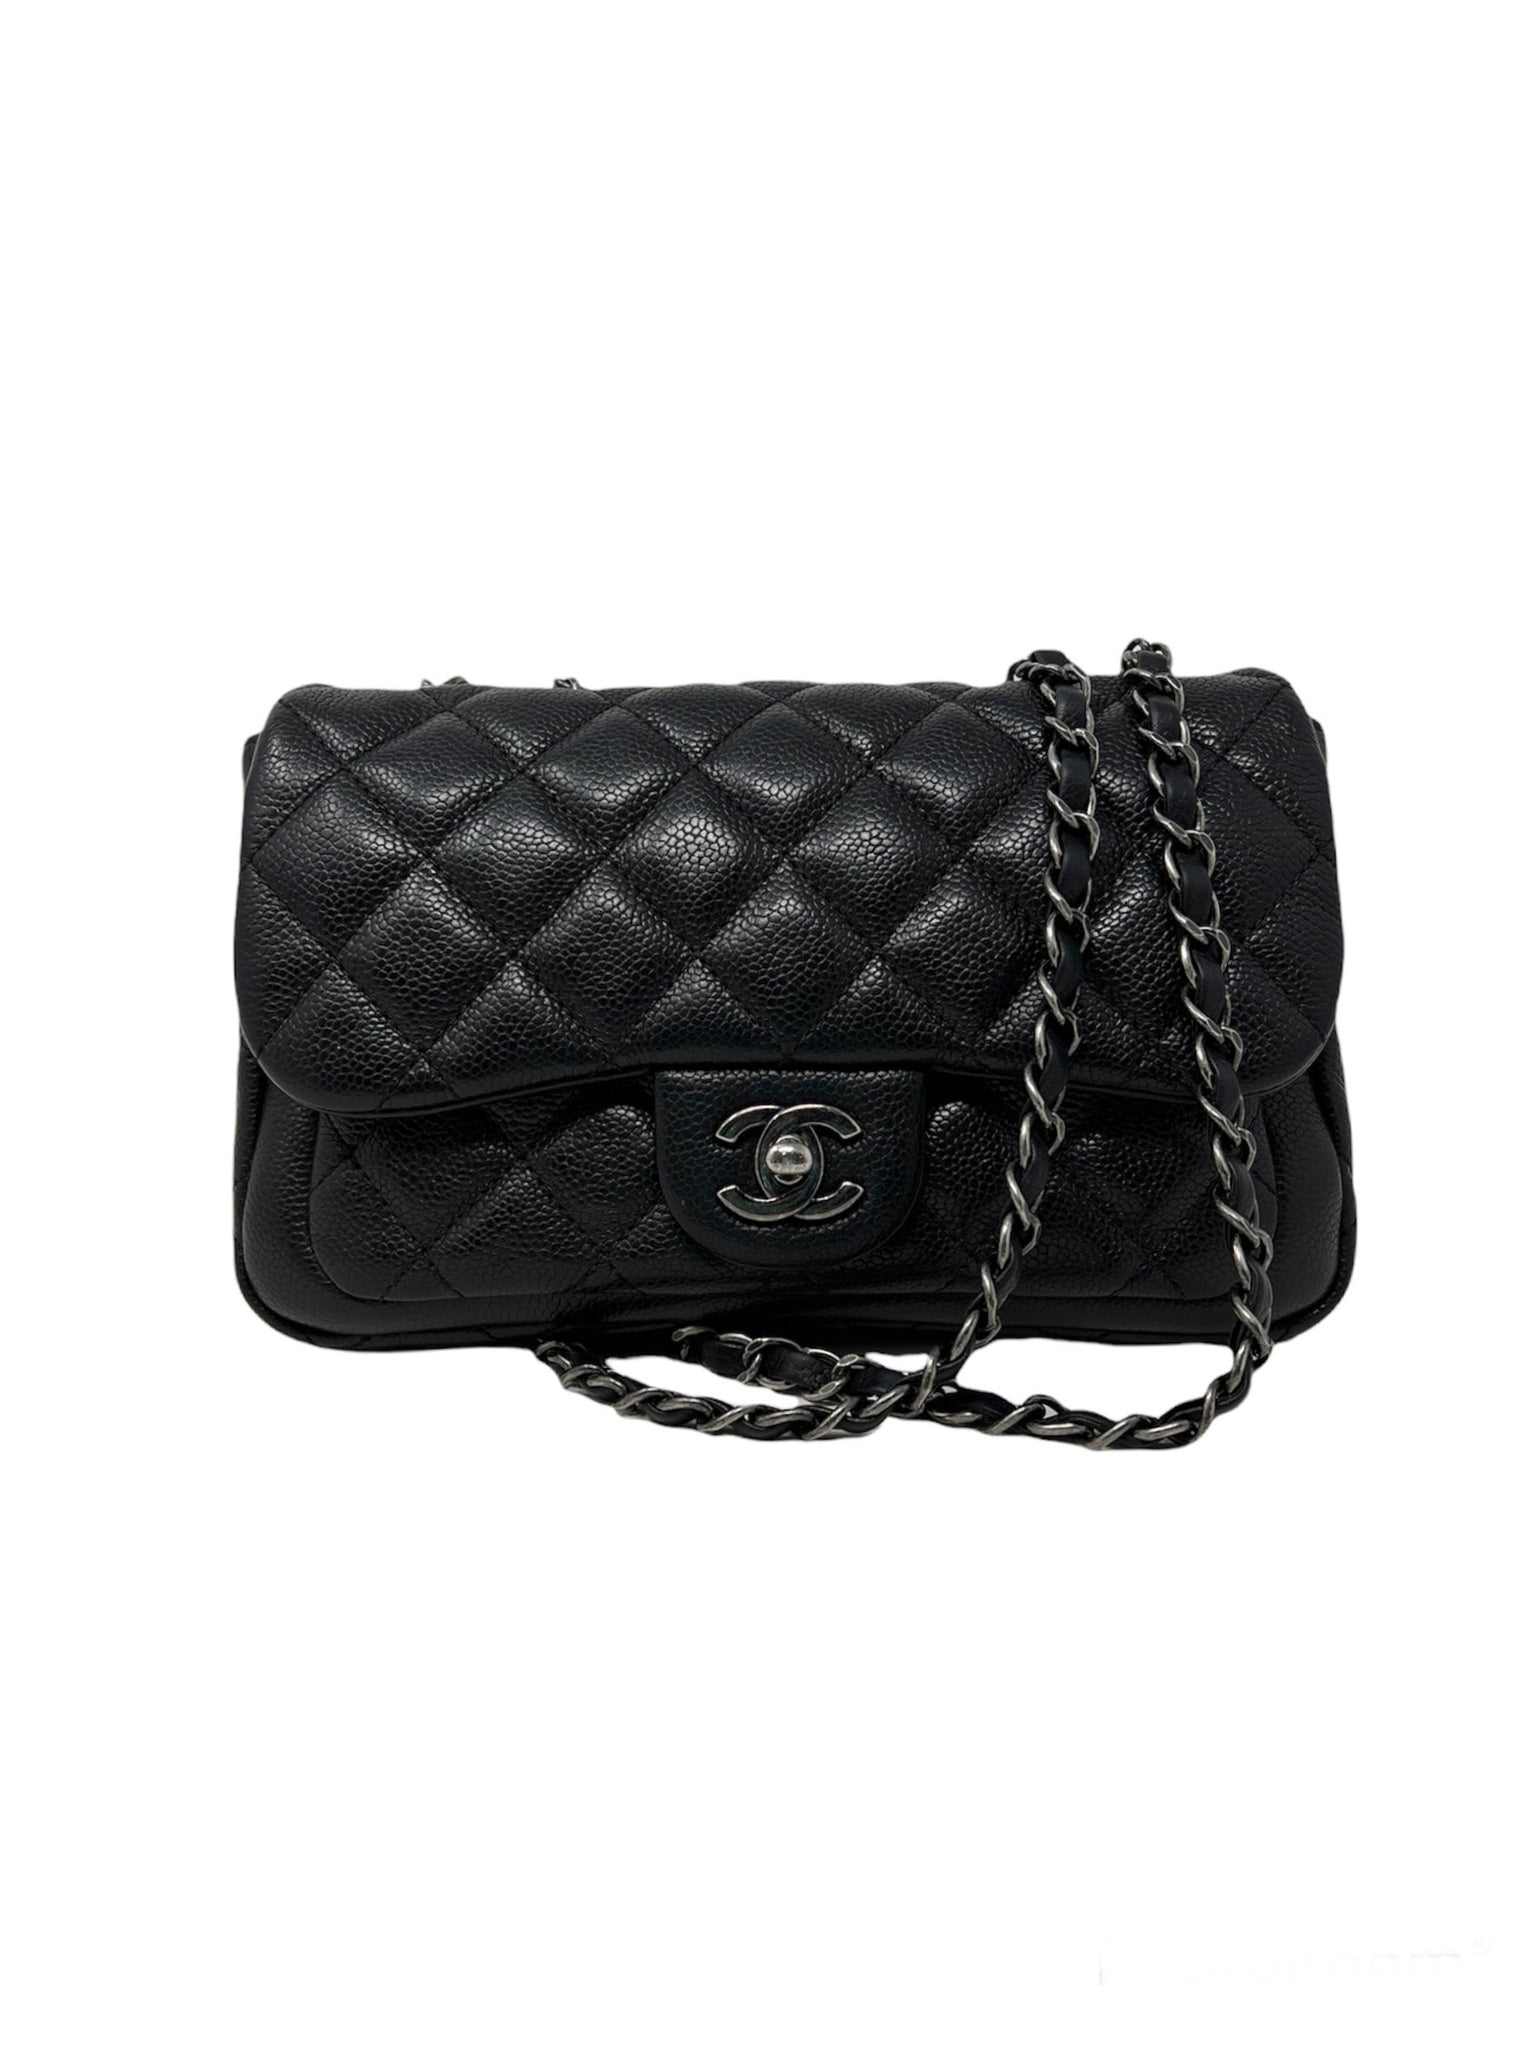 Chanel So Black Limited Edition Jumbo in Lambskin